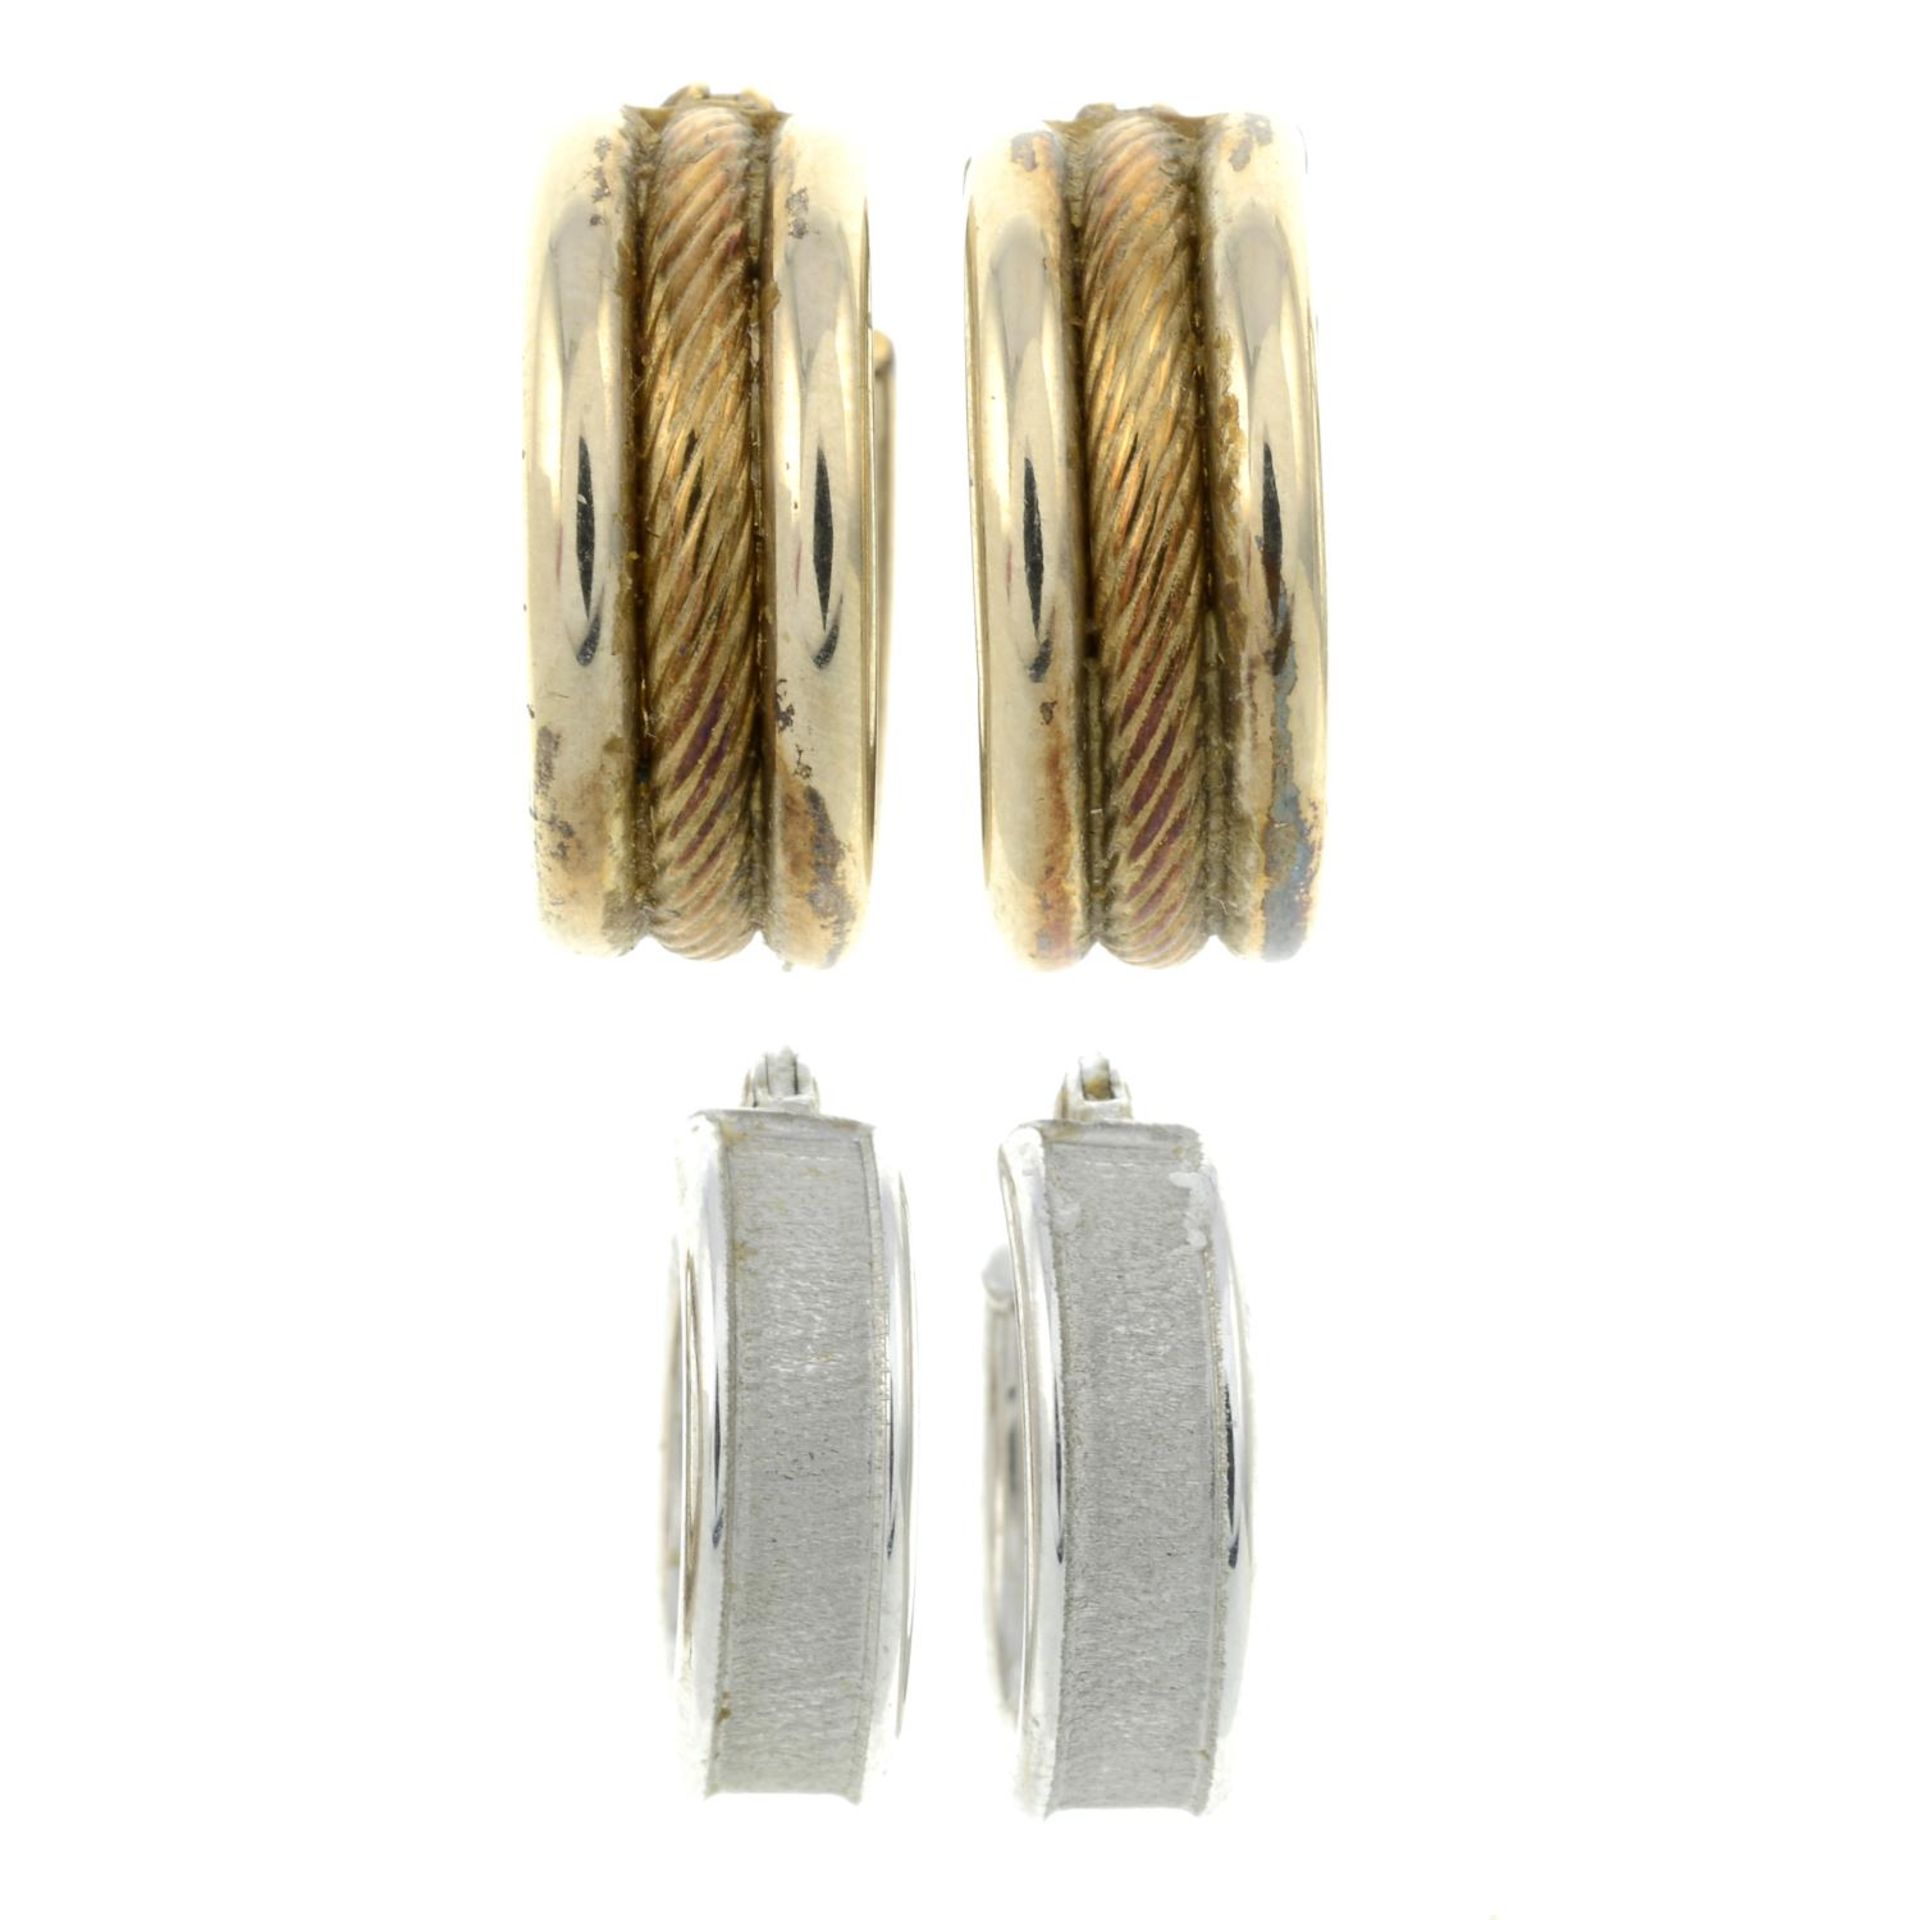 9ct gold bi-colour hoop earrings, hallmarks for 9ct gold, diameter 1.7cms, 2.8gms.